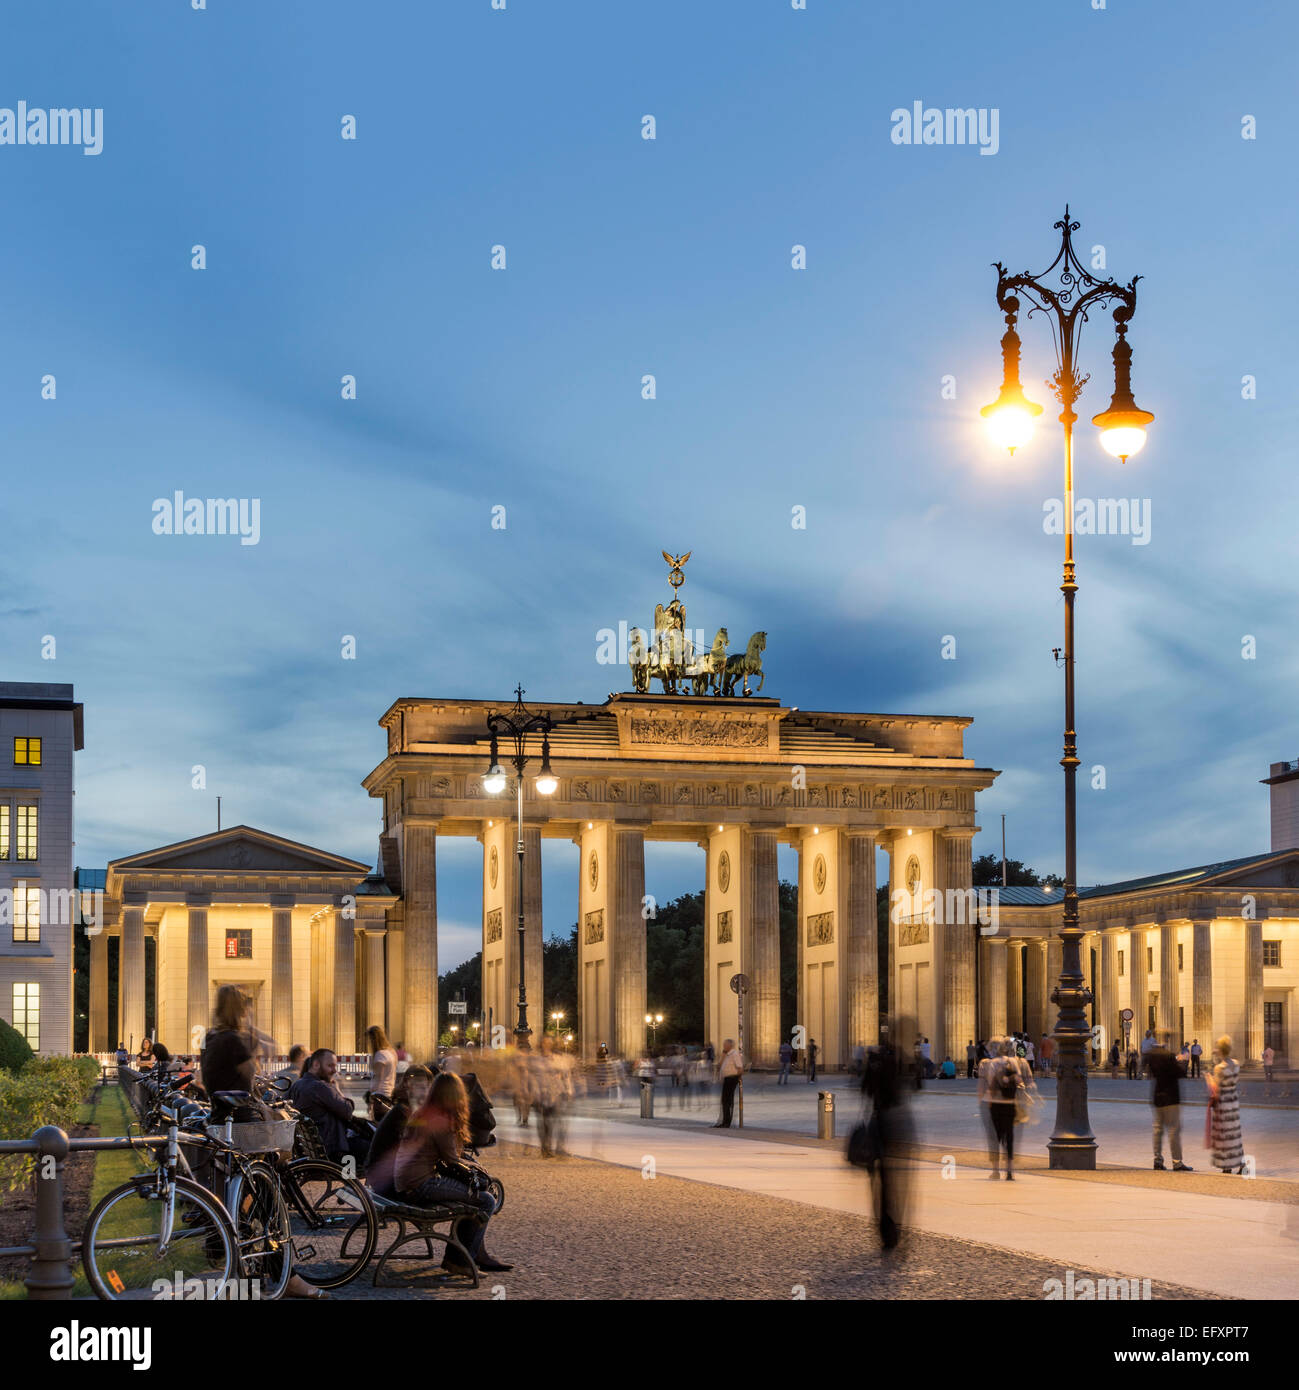 La Porta di Brandeburgo, Brandenburger Tor, Paris Square, Pariser Platz, Berlin, Germania, Foto Stock